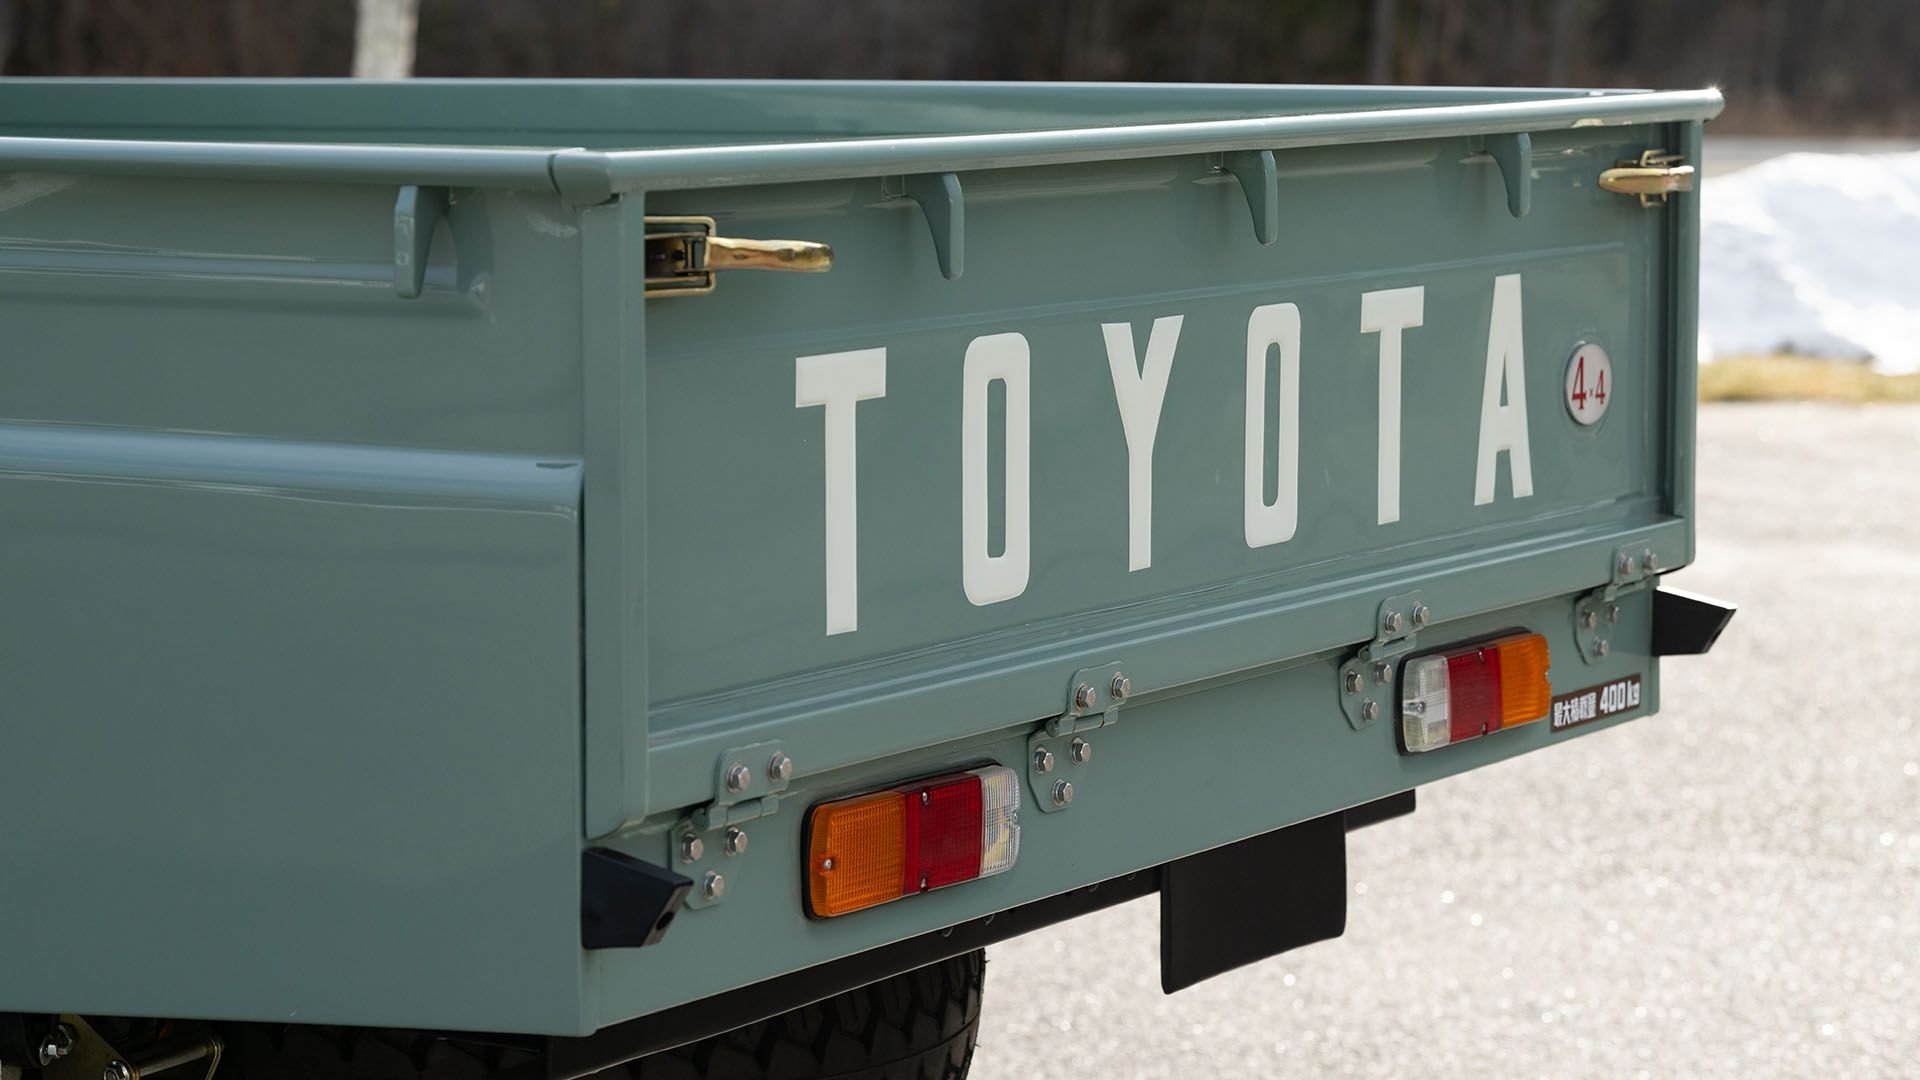 Broad Arrow Auctions | 1981 Toyota Land Cruiser Pickup